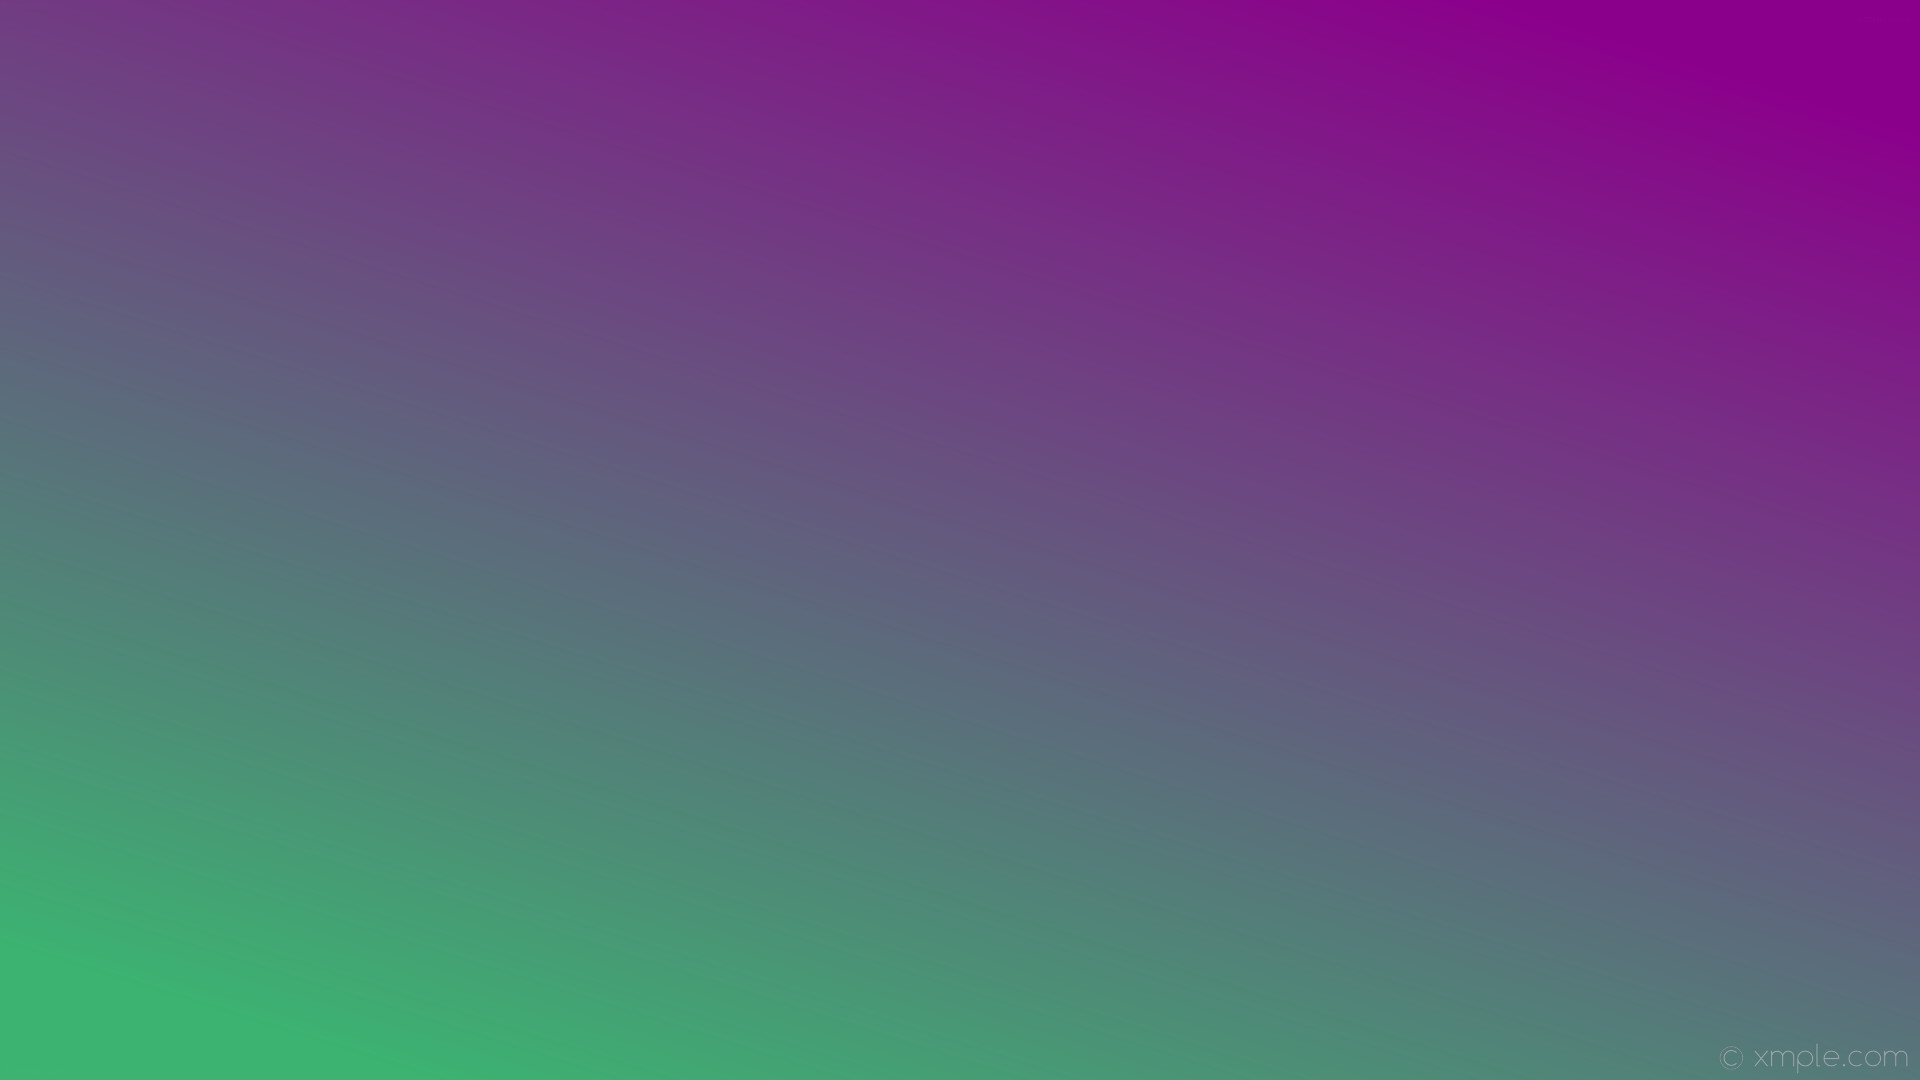 1920x1080 wallpaper linear purple green gradient medium sea green dark magenta  #3cb371 #8b008b 225Â°